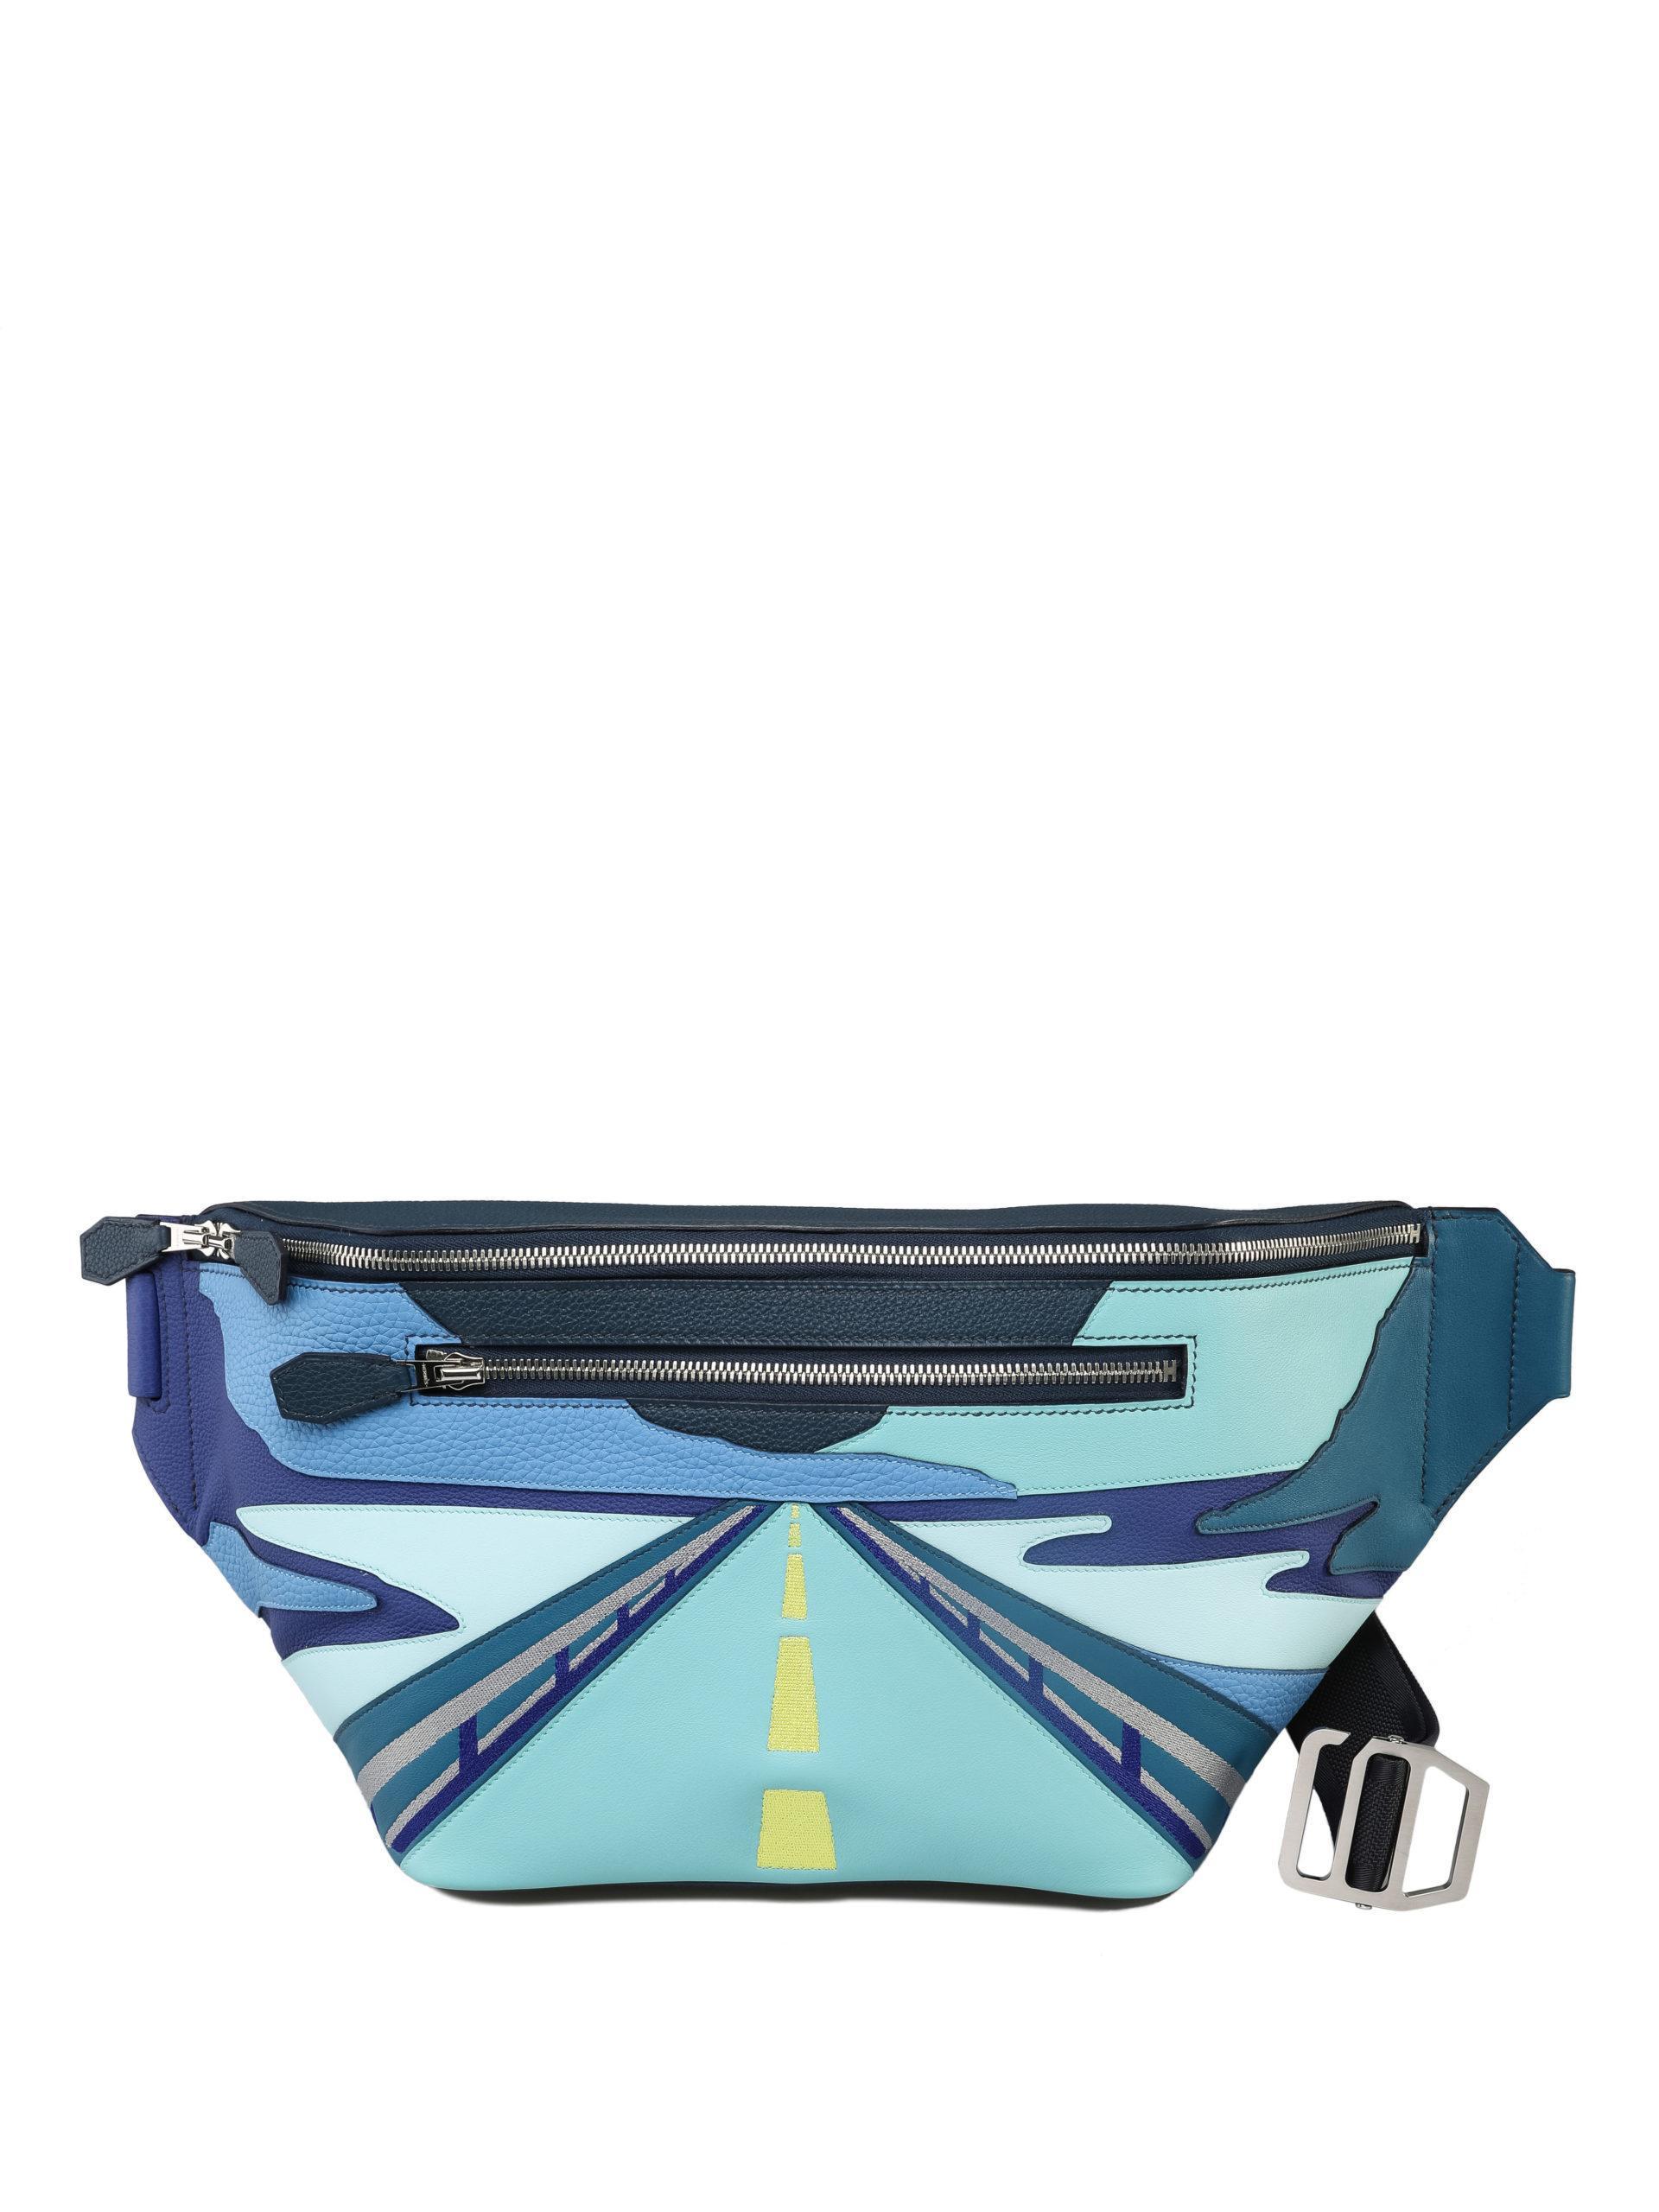 Blue Hermes Endless Road Clutch Bag